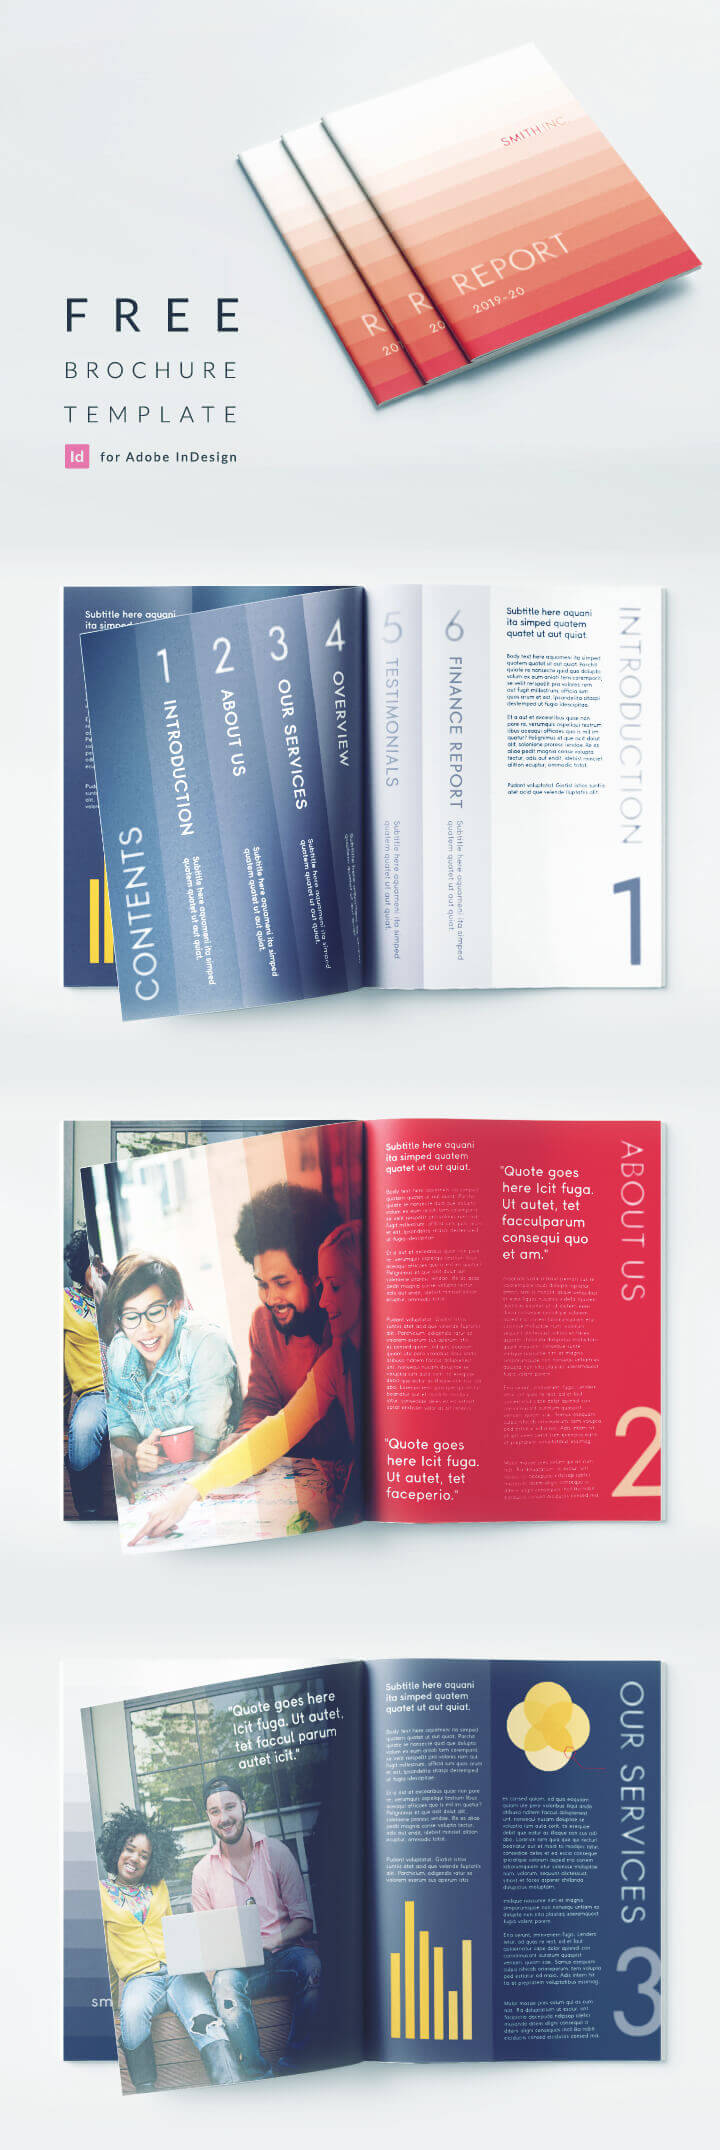 Elegant Corporate Brochure Or Report Indesign Template For Free Annual Report Template Indesign